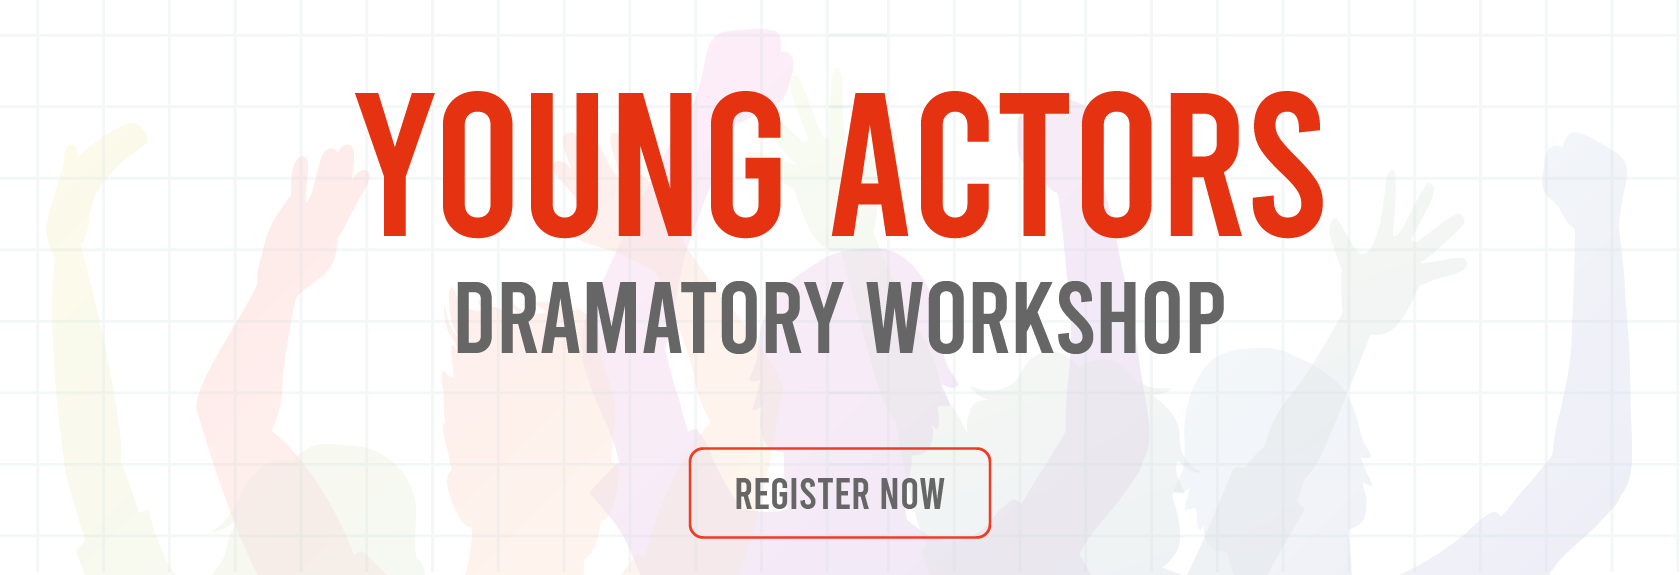 Actor Prepares - Young Actors Training Program